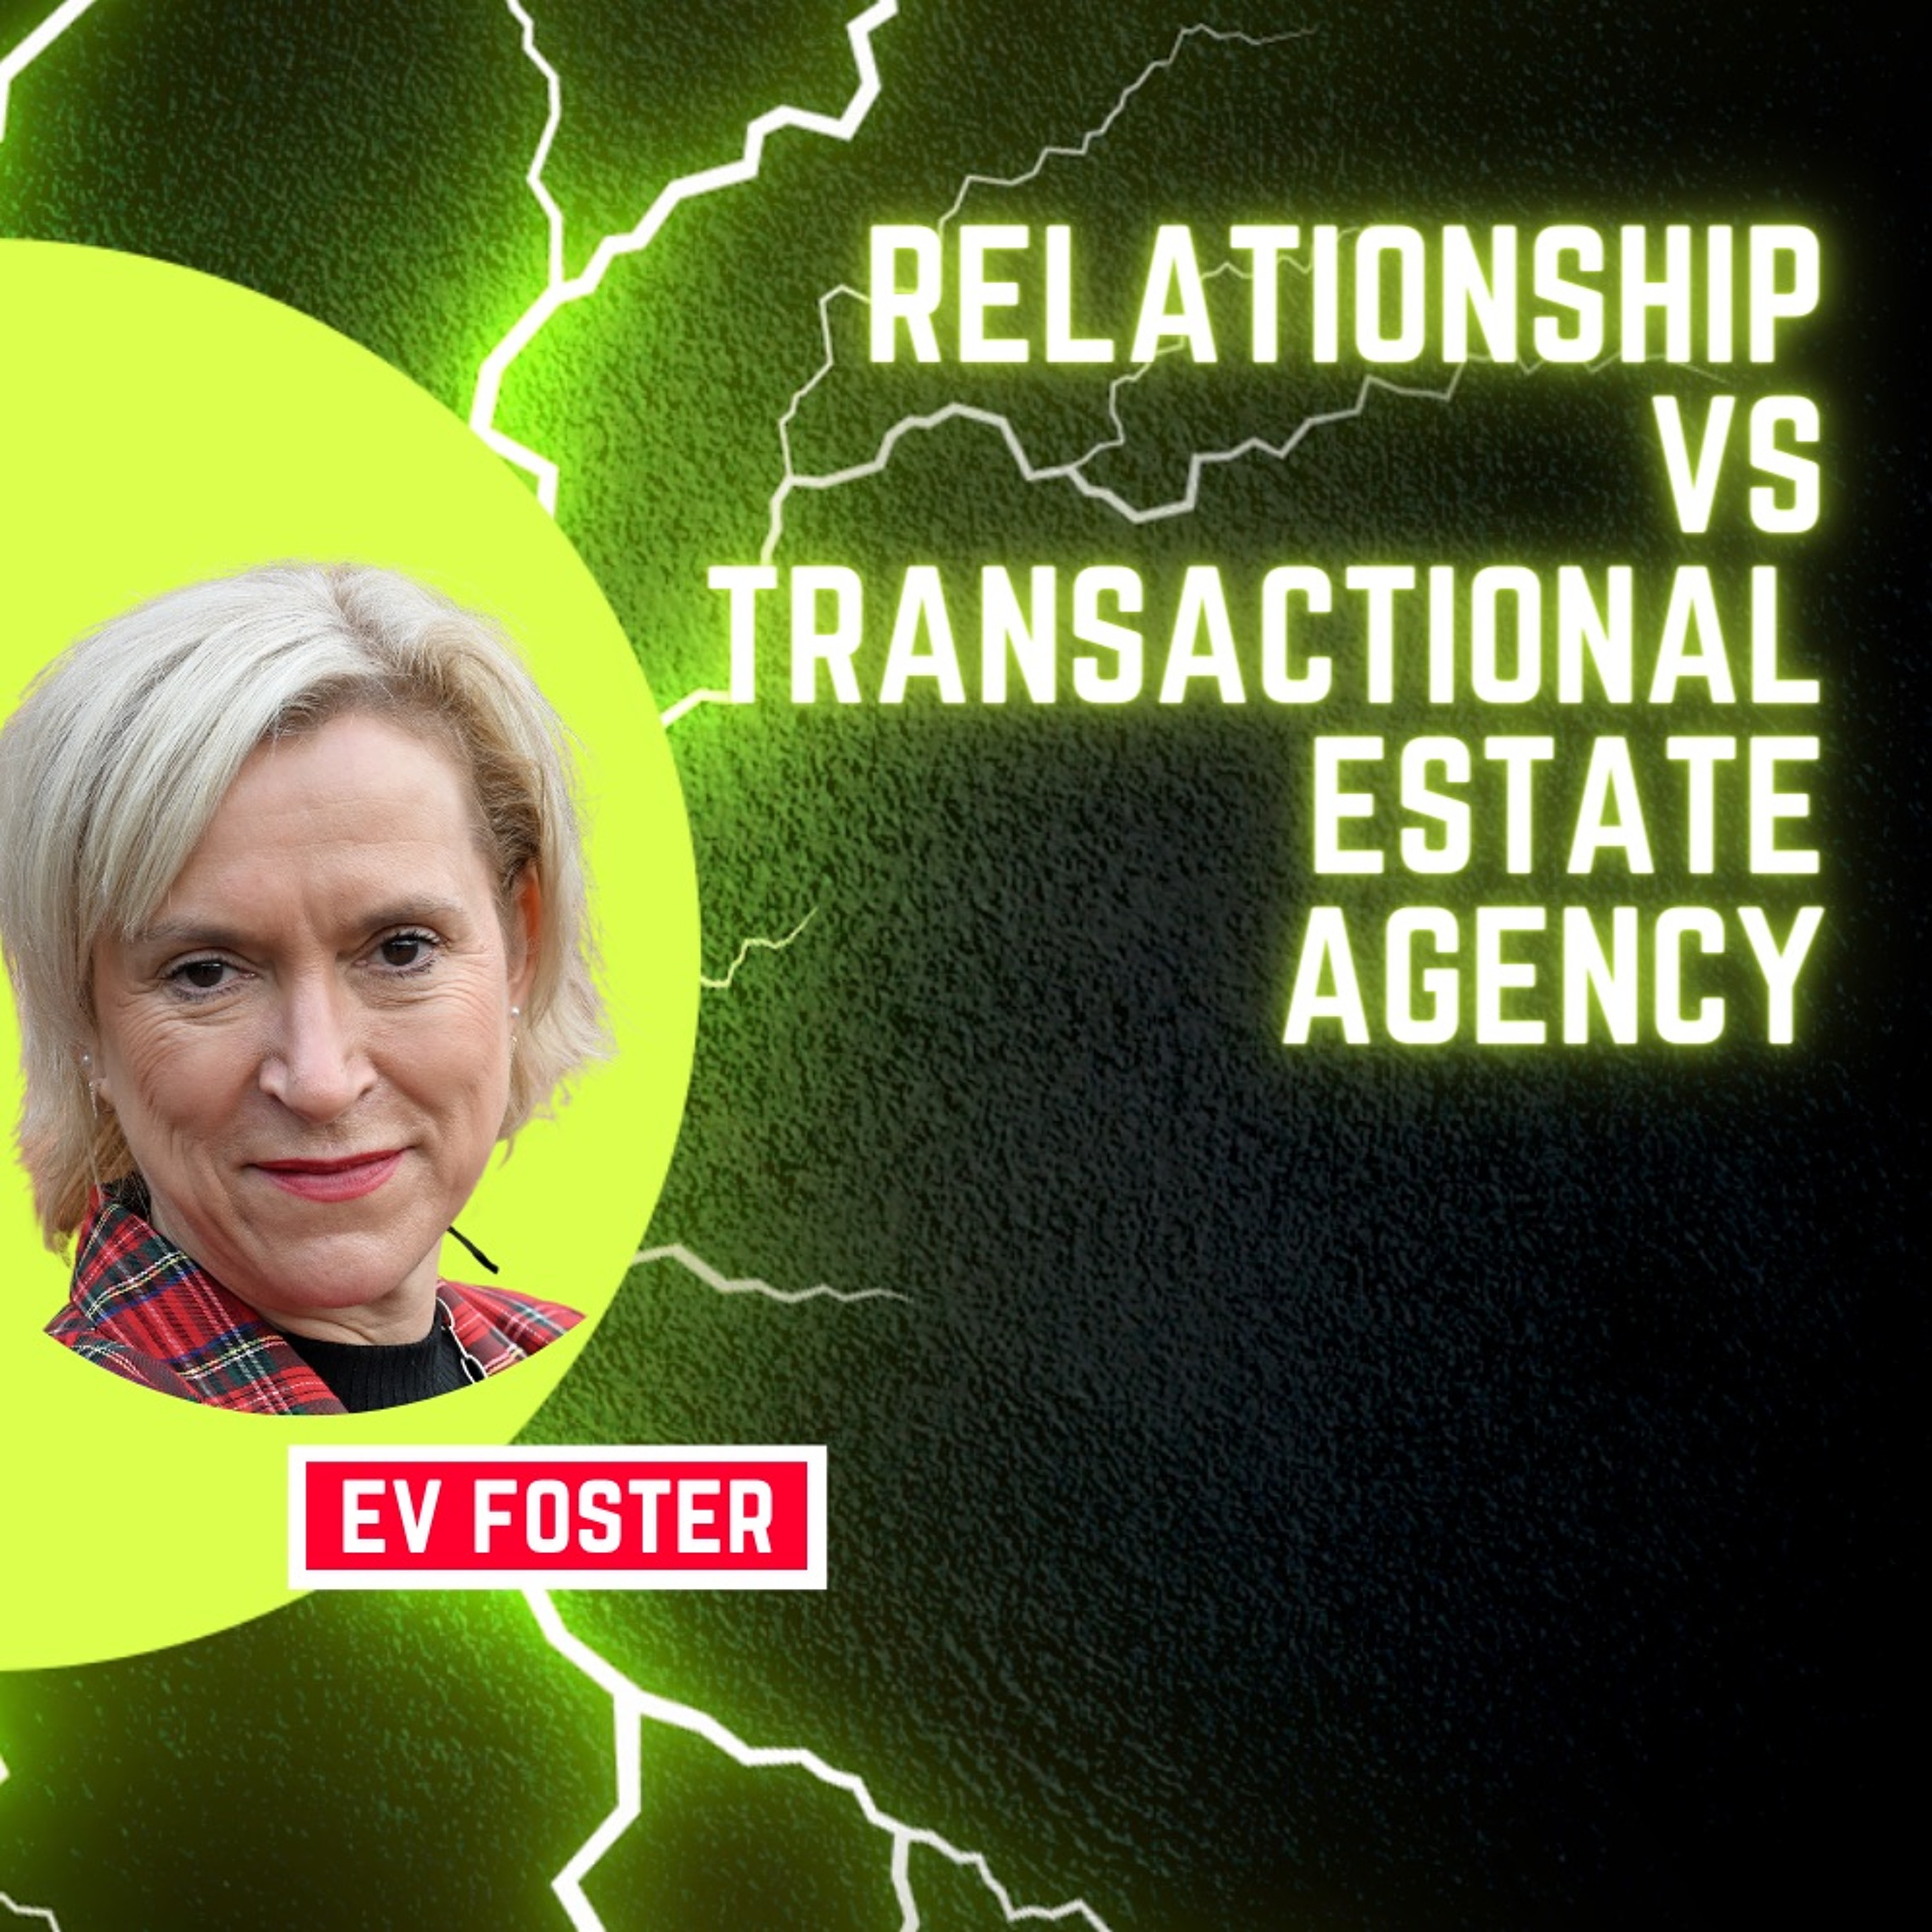 Relationship Vs Transactional Estate Agency - Ep. 1848